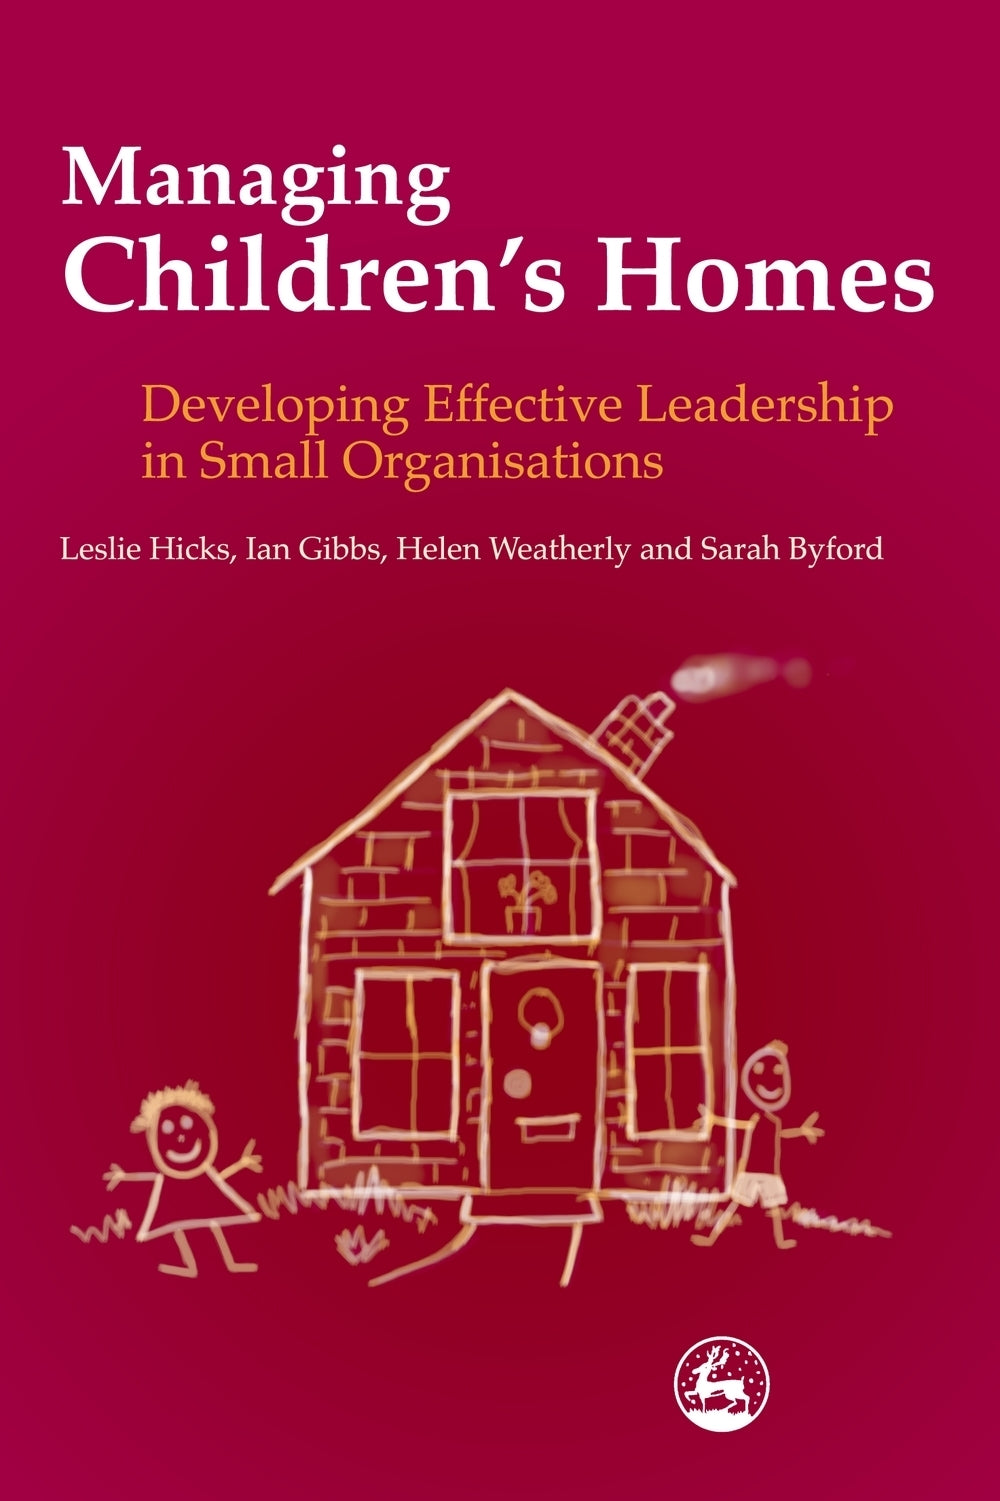 Managing Children's Homes by Ian Gibbs, Leslie Hicks, Sarah Byford, Helen Weatherly